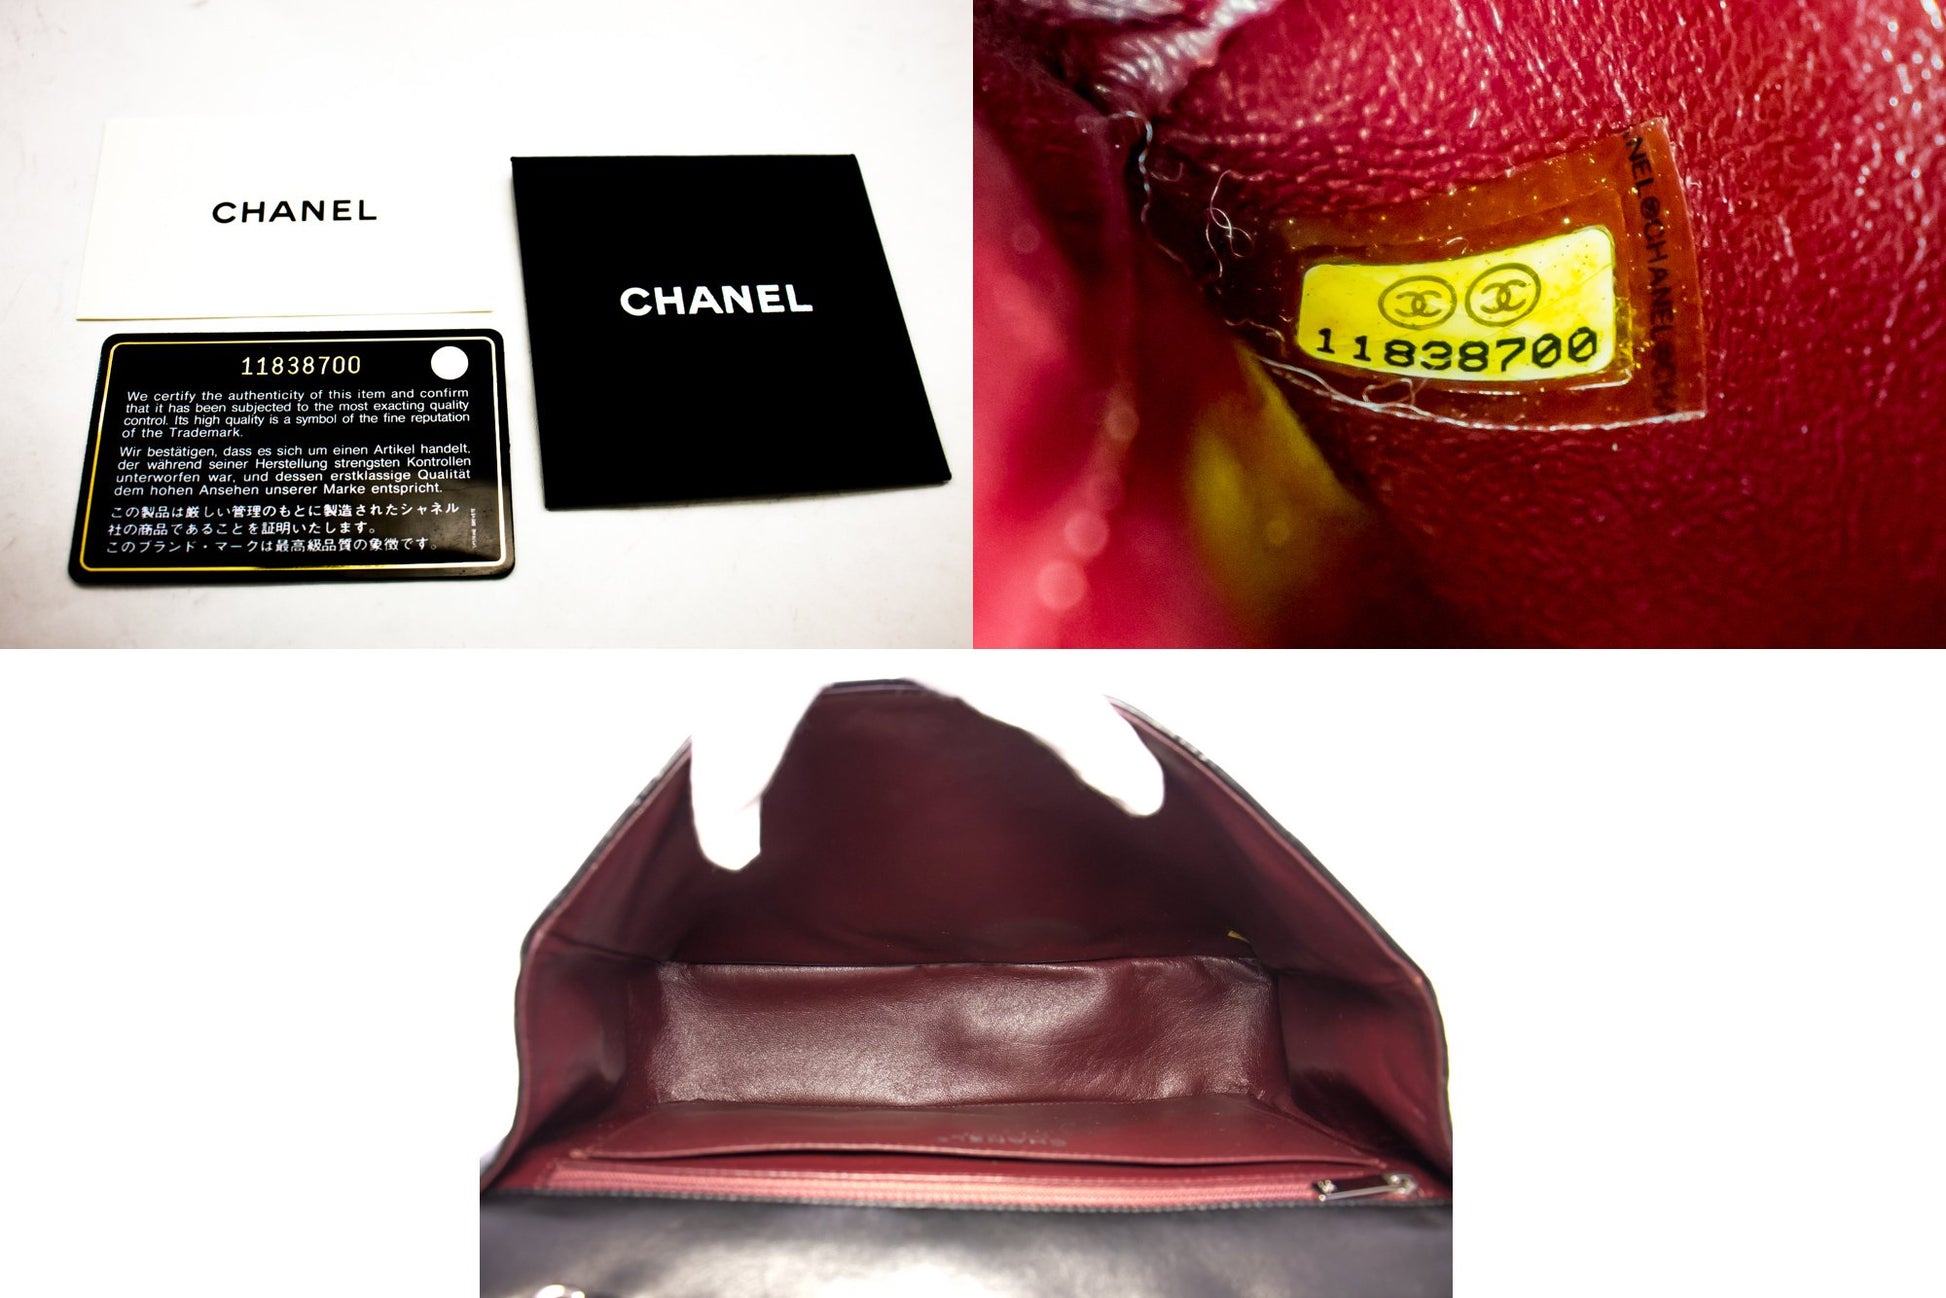 white and black chanel handbag authentic